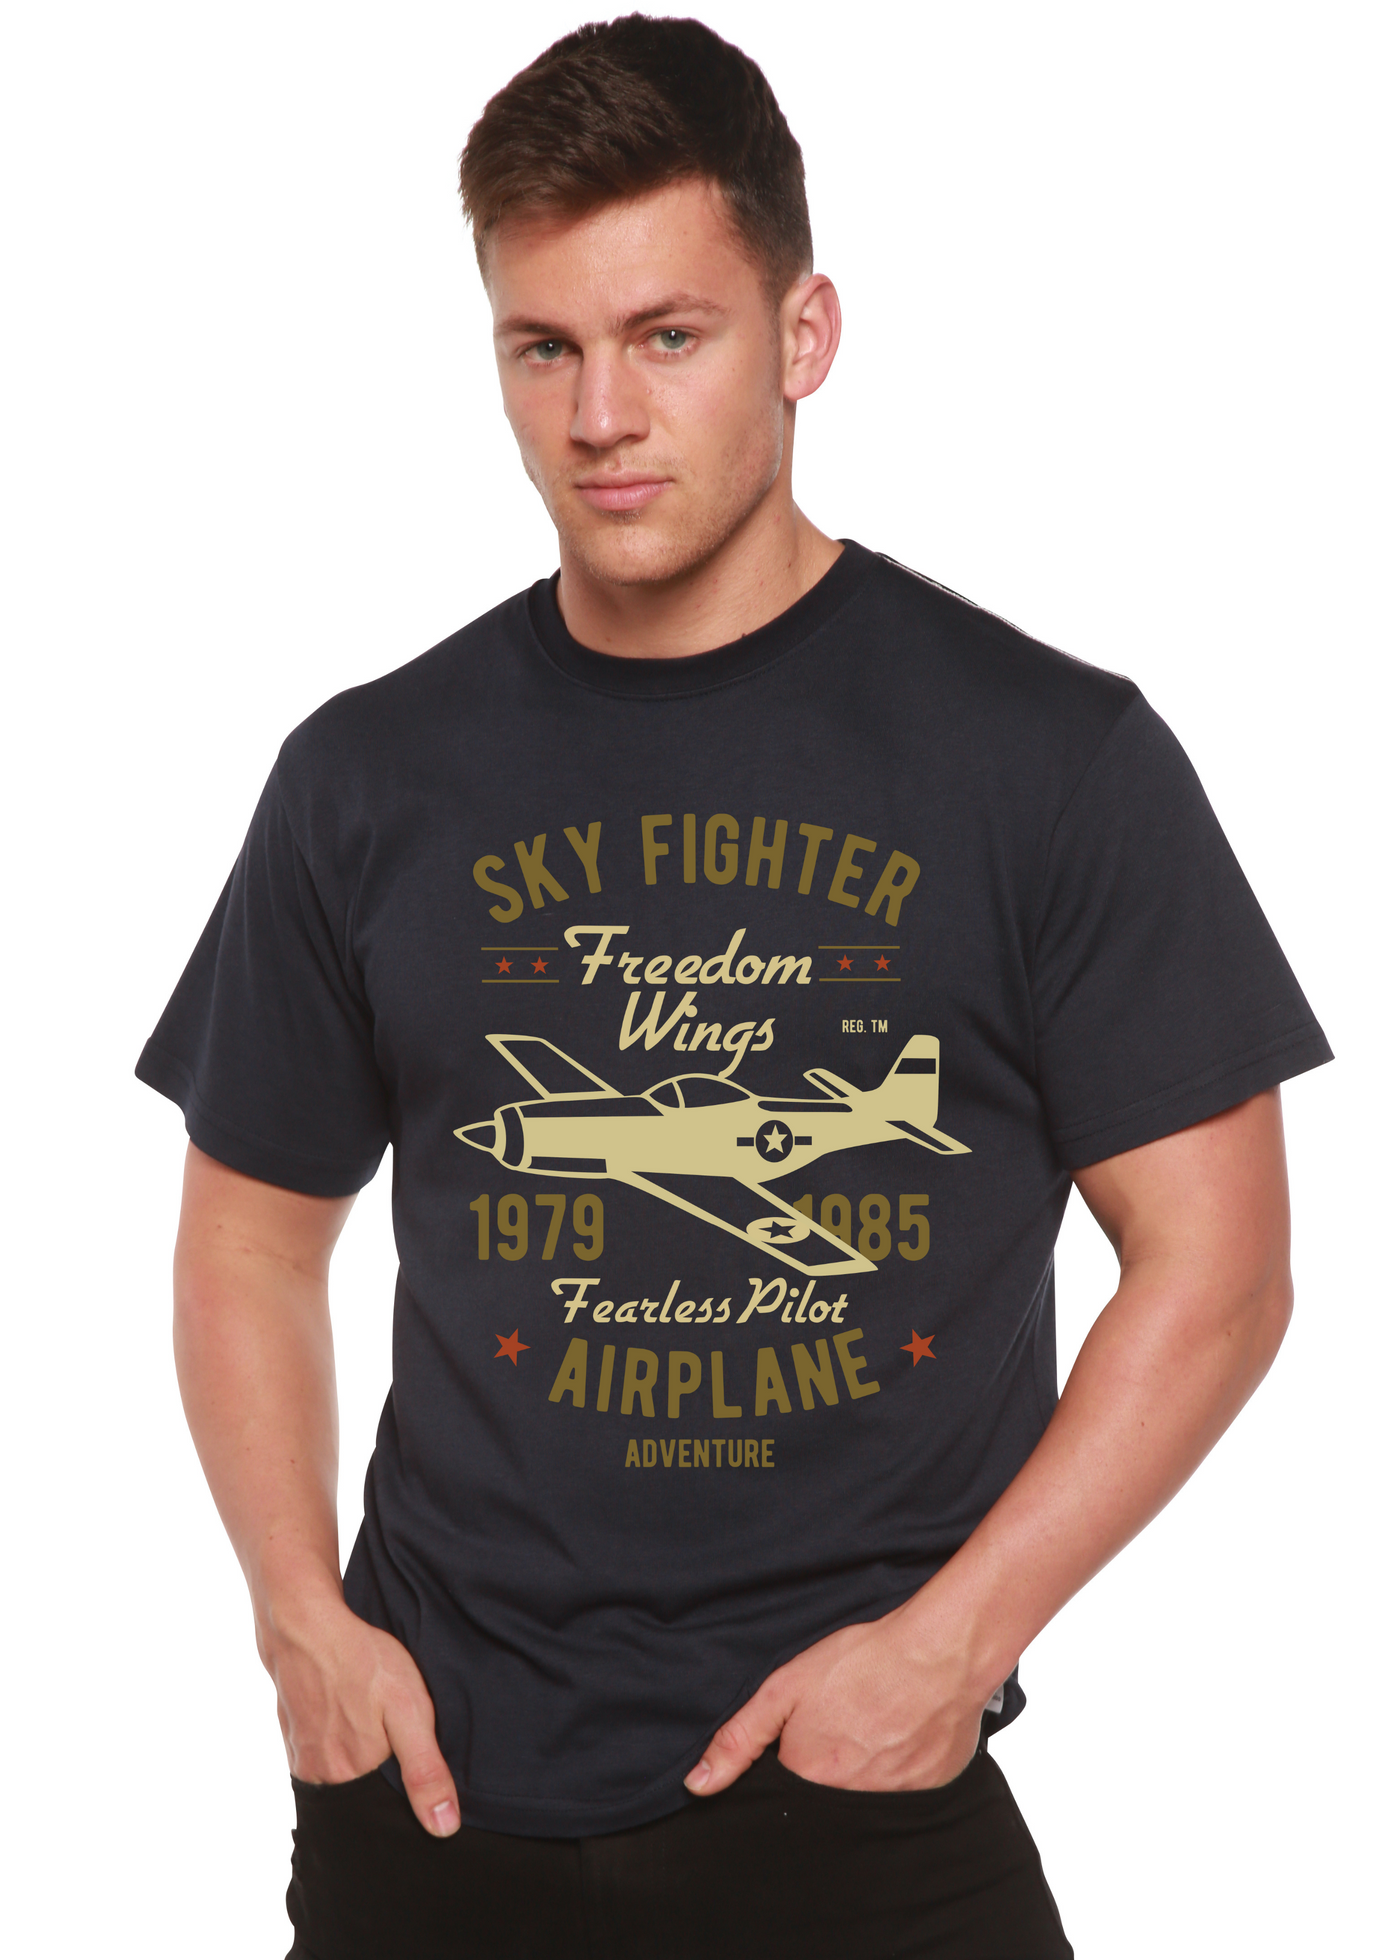 Sky Fighter men's bamboo tshirt navy blue